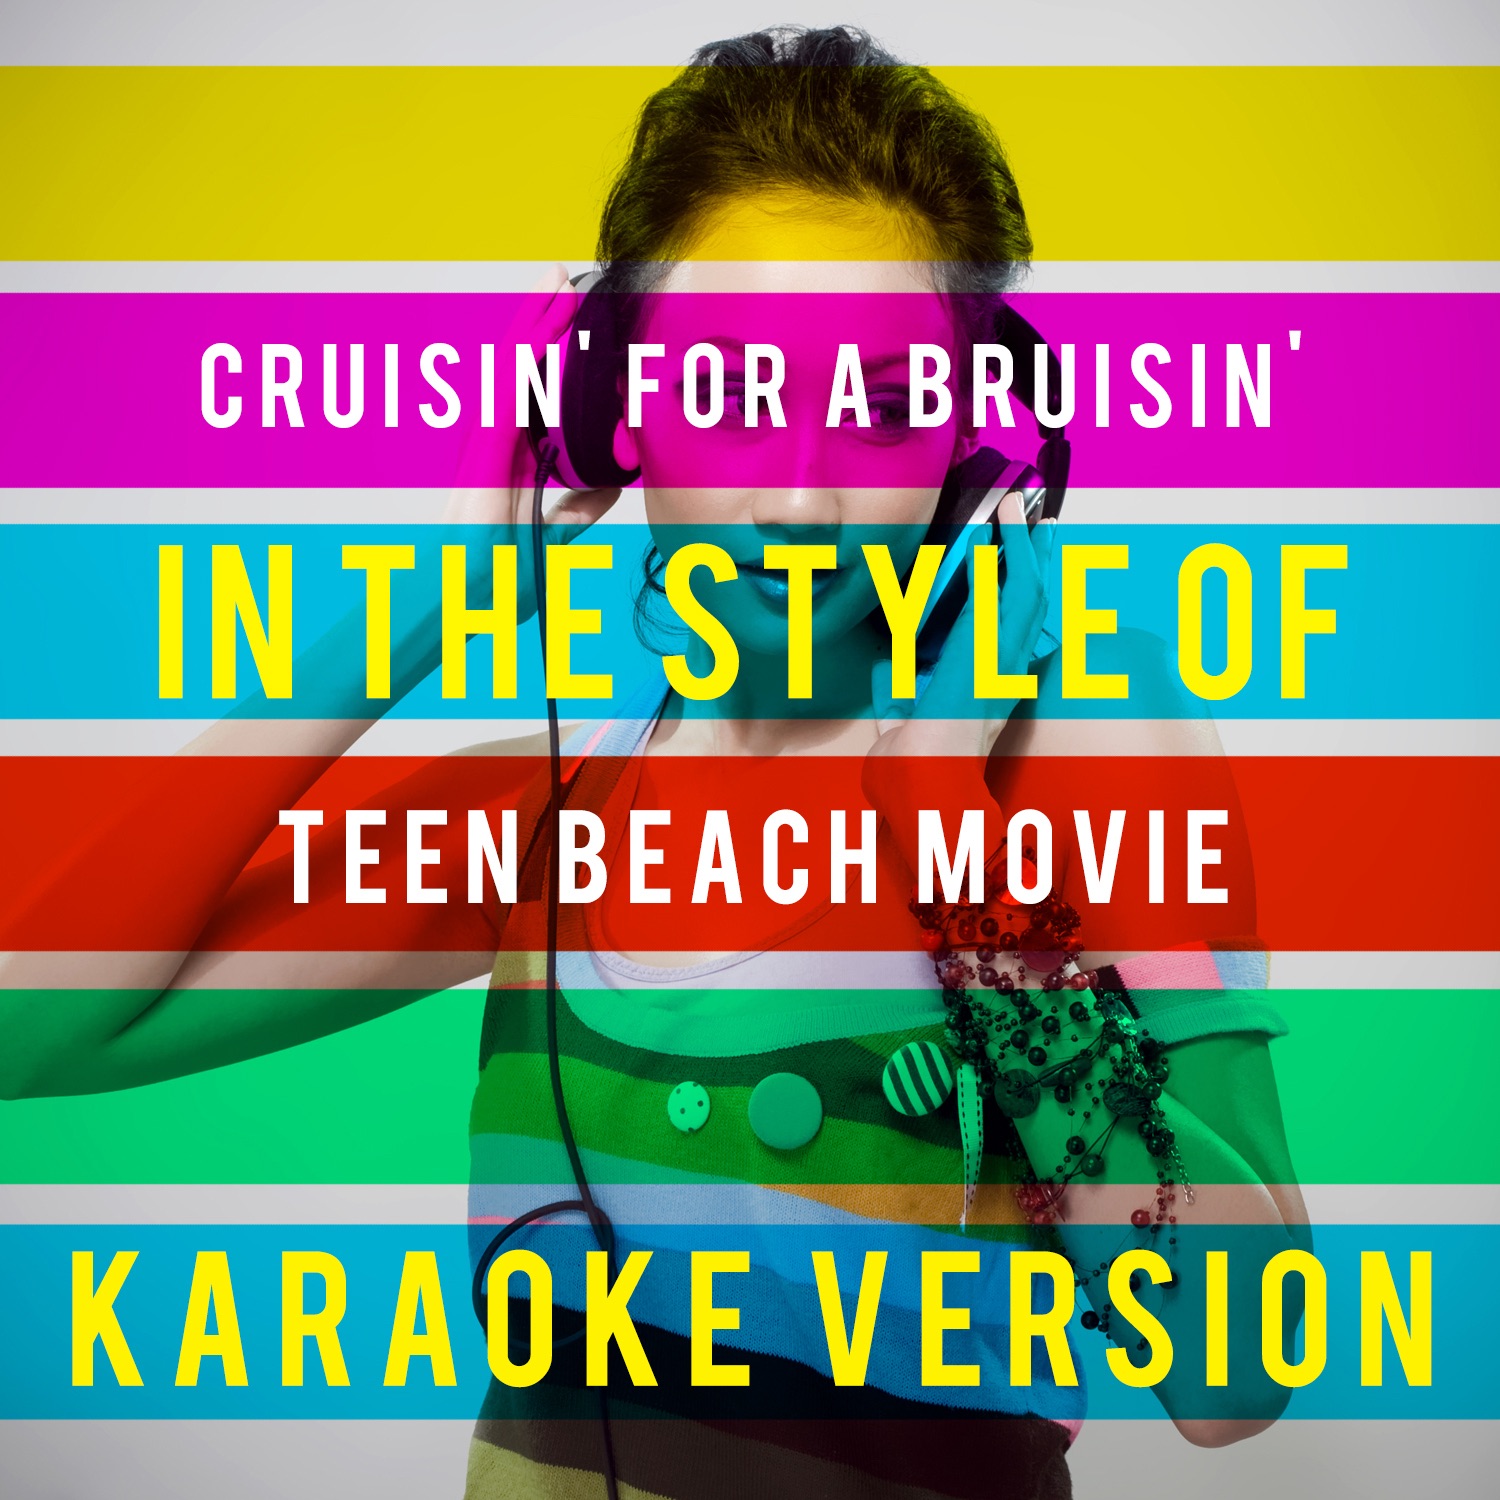 Teens Karaoke Version A 110